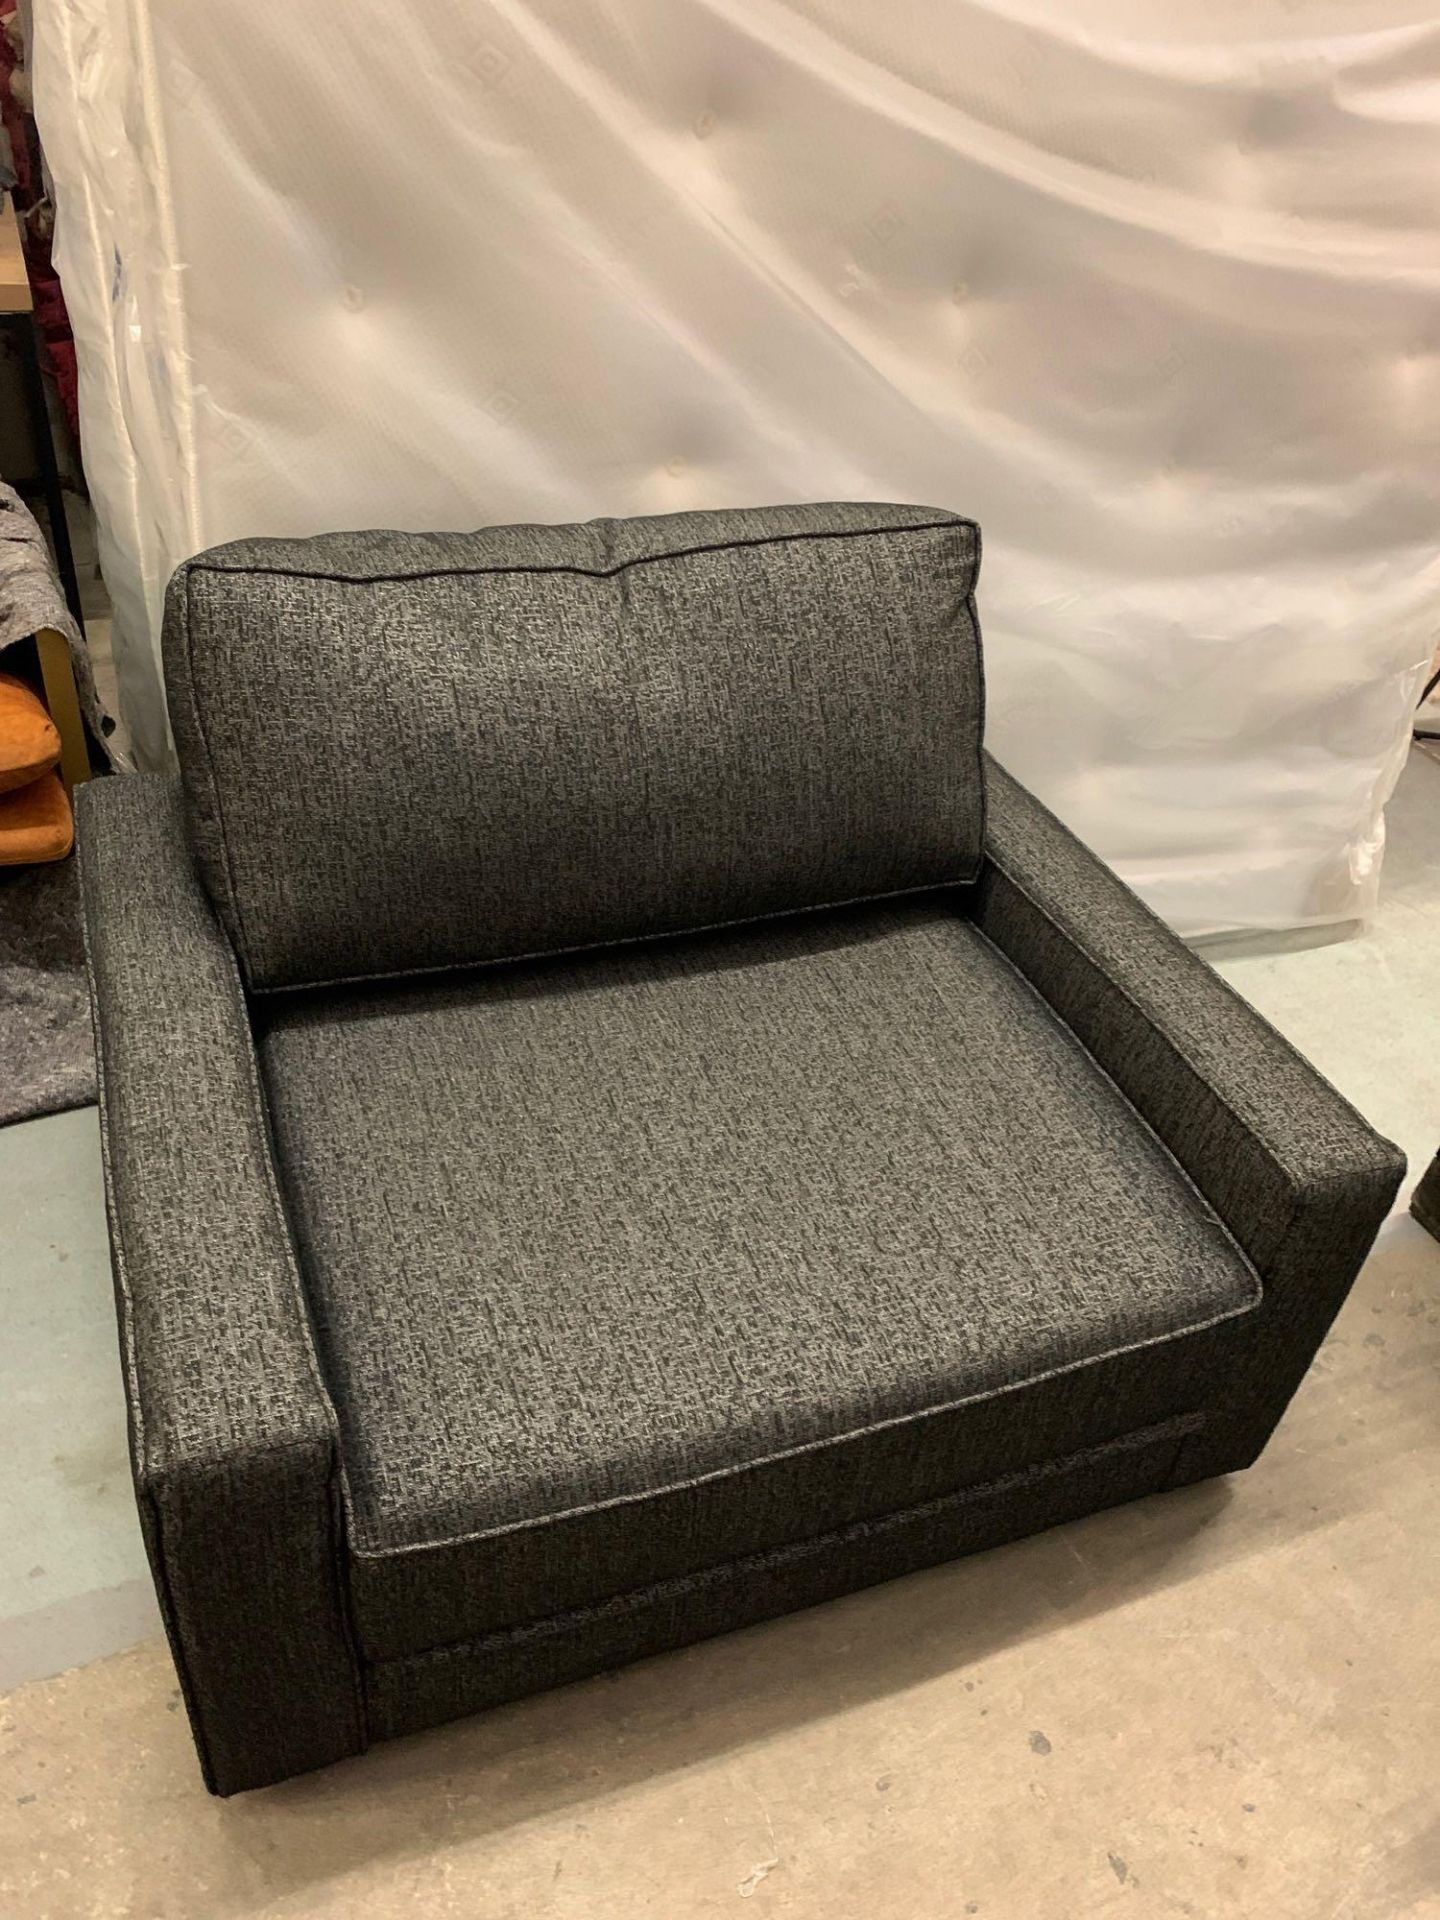 Black Linen Armchair Sofa Bed - Image 3 of 4